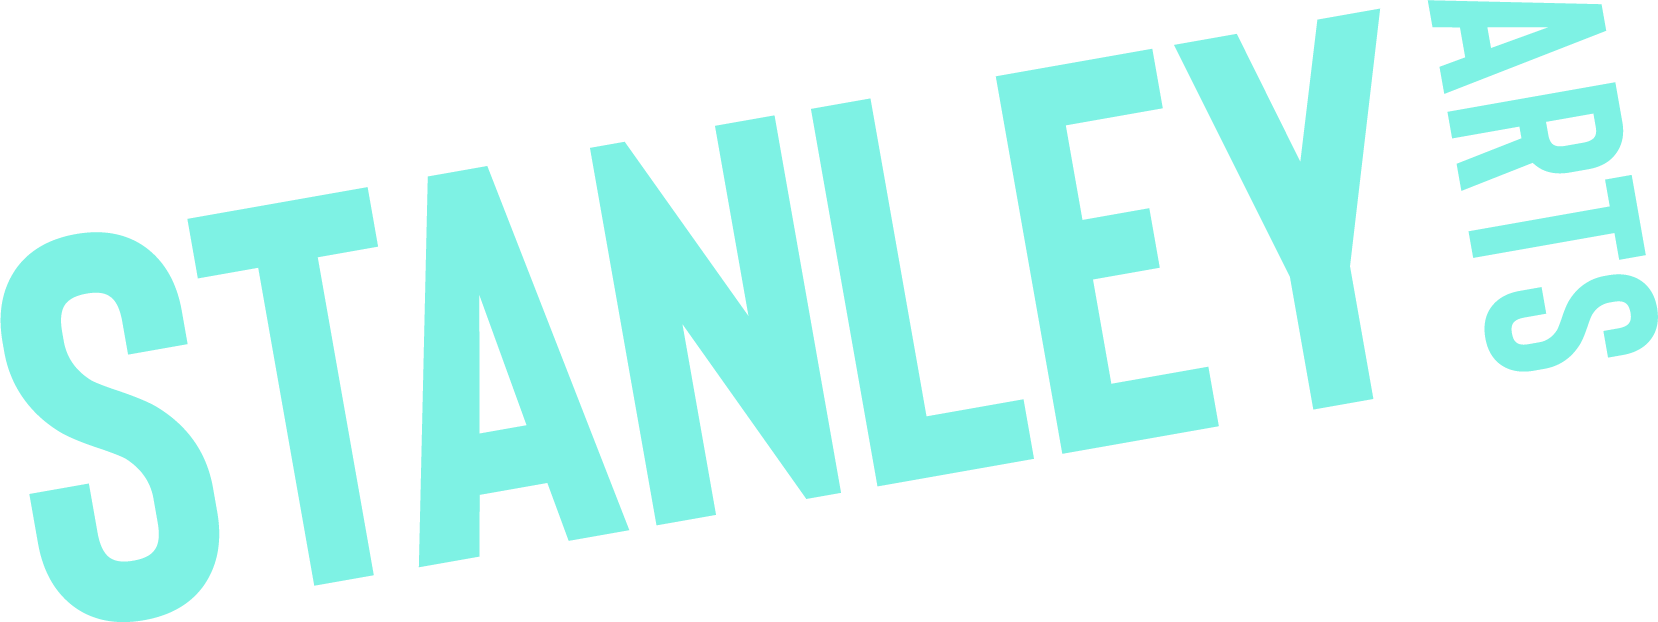 Stanley Arts logo